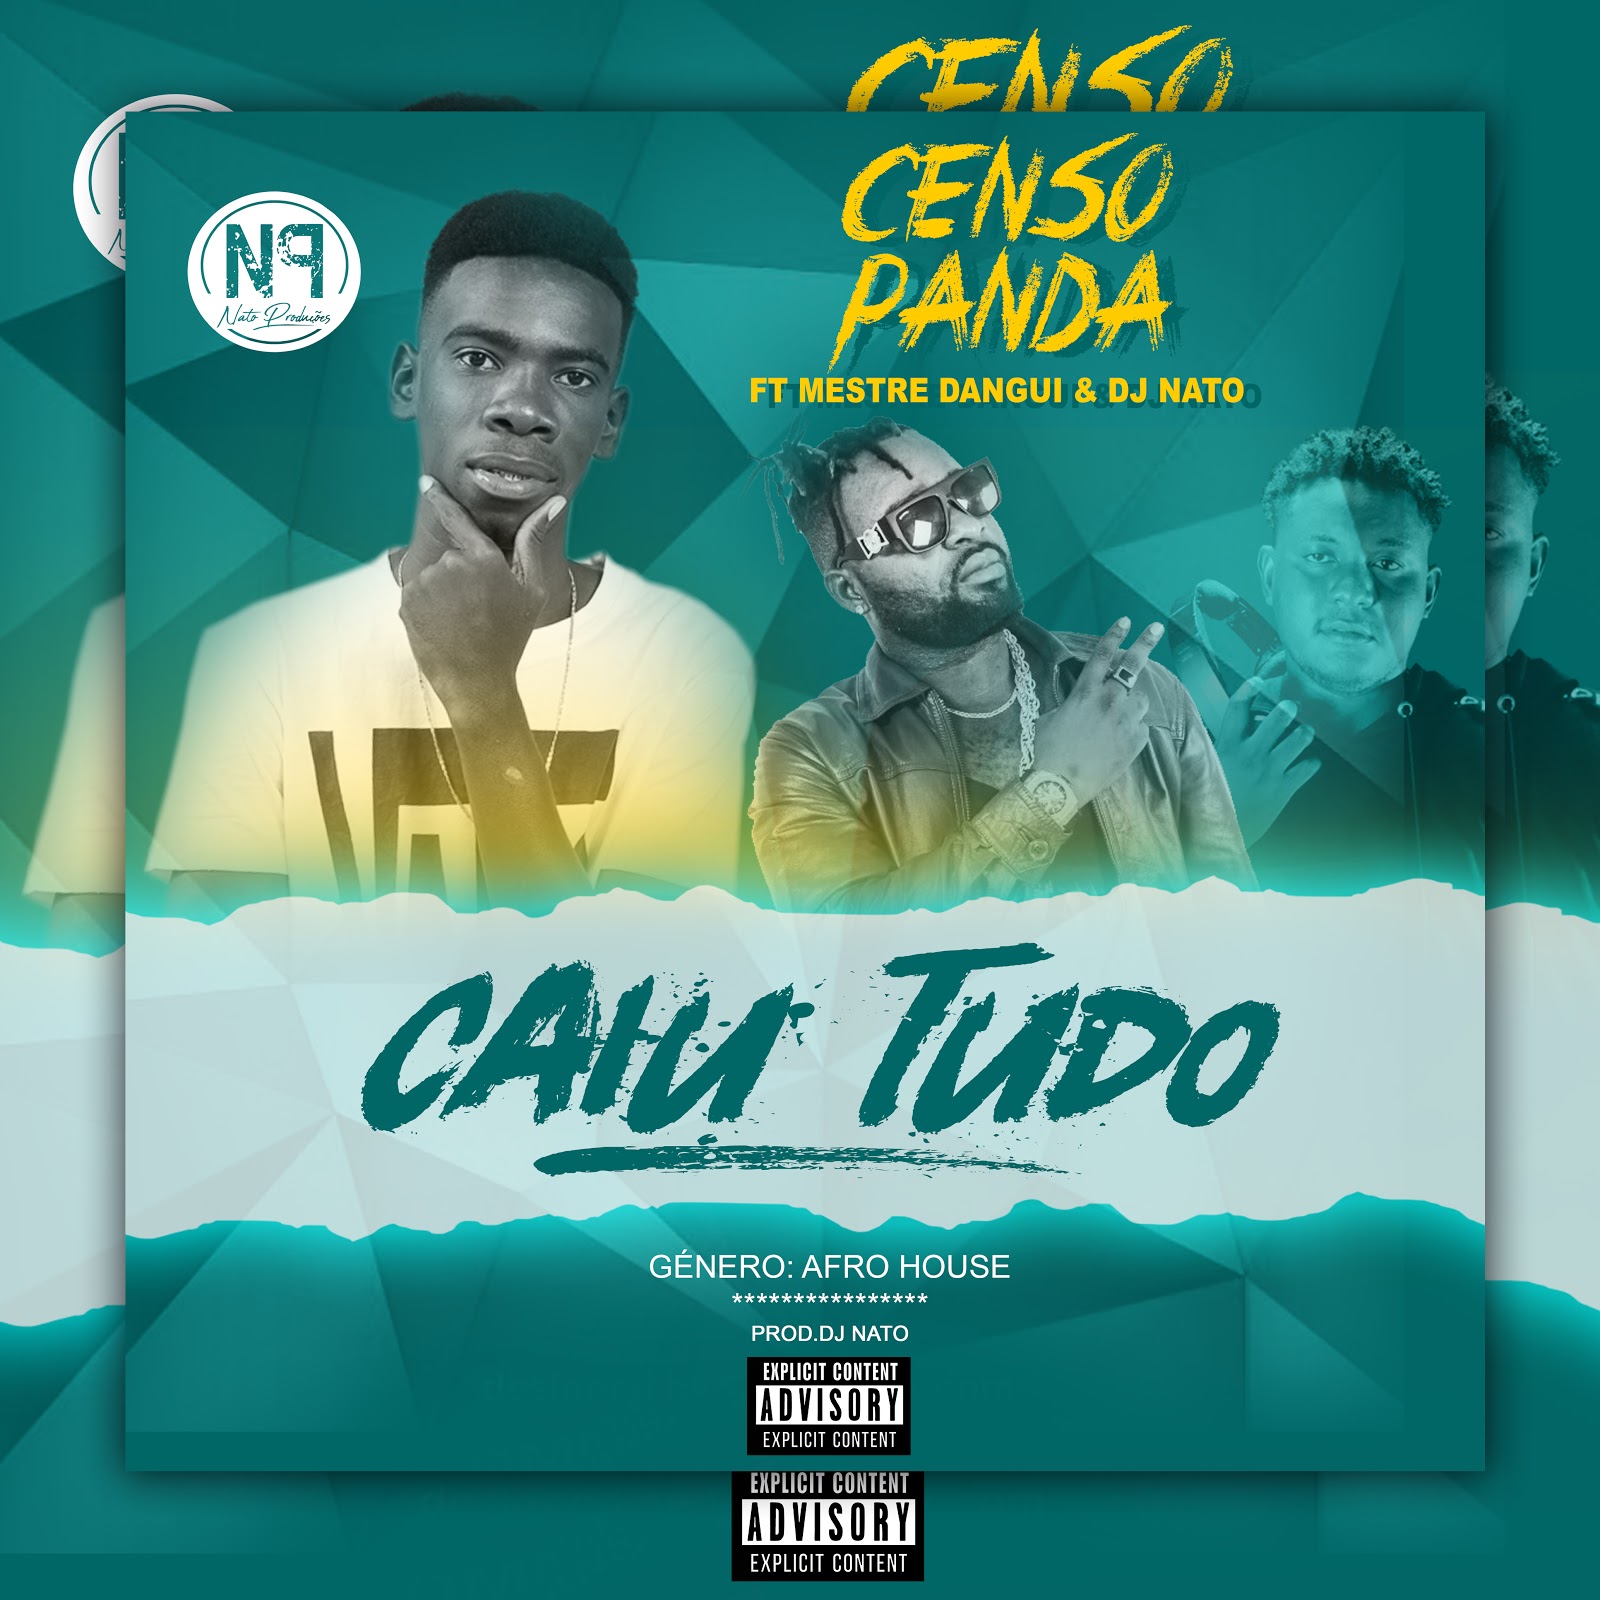 Censo Panda ft Mestre Dangui ( Caiu tudo ) Afro house 2019 ( Prod Dj ...